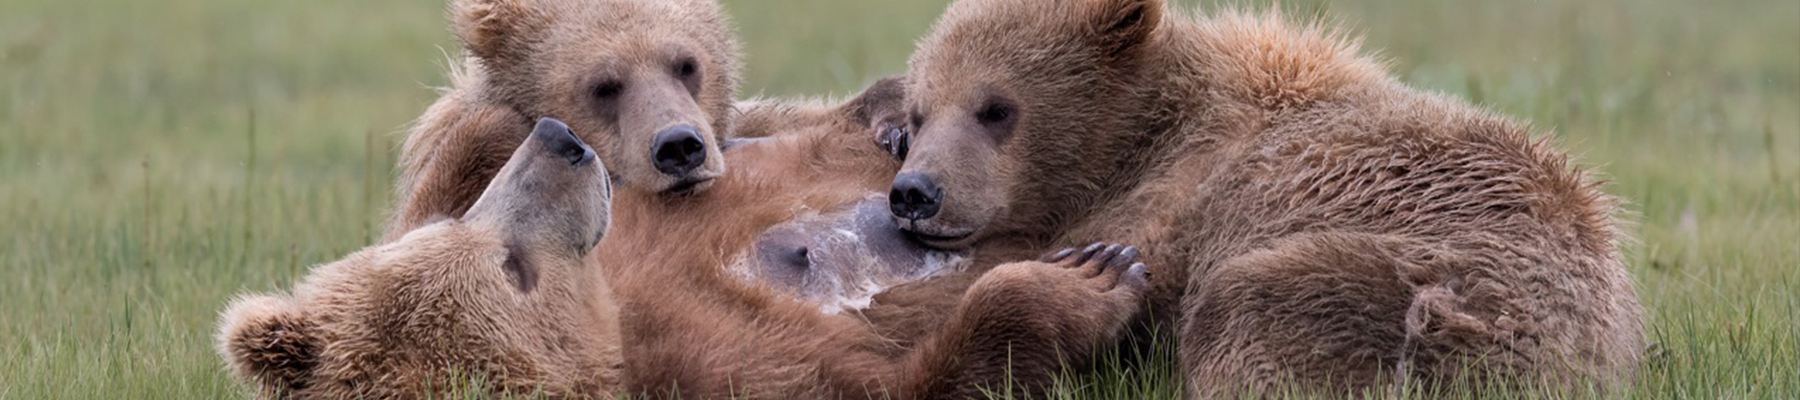 Bear cubs nursing.